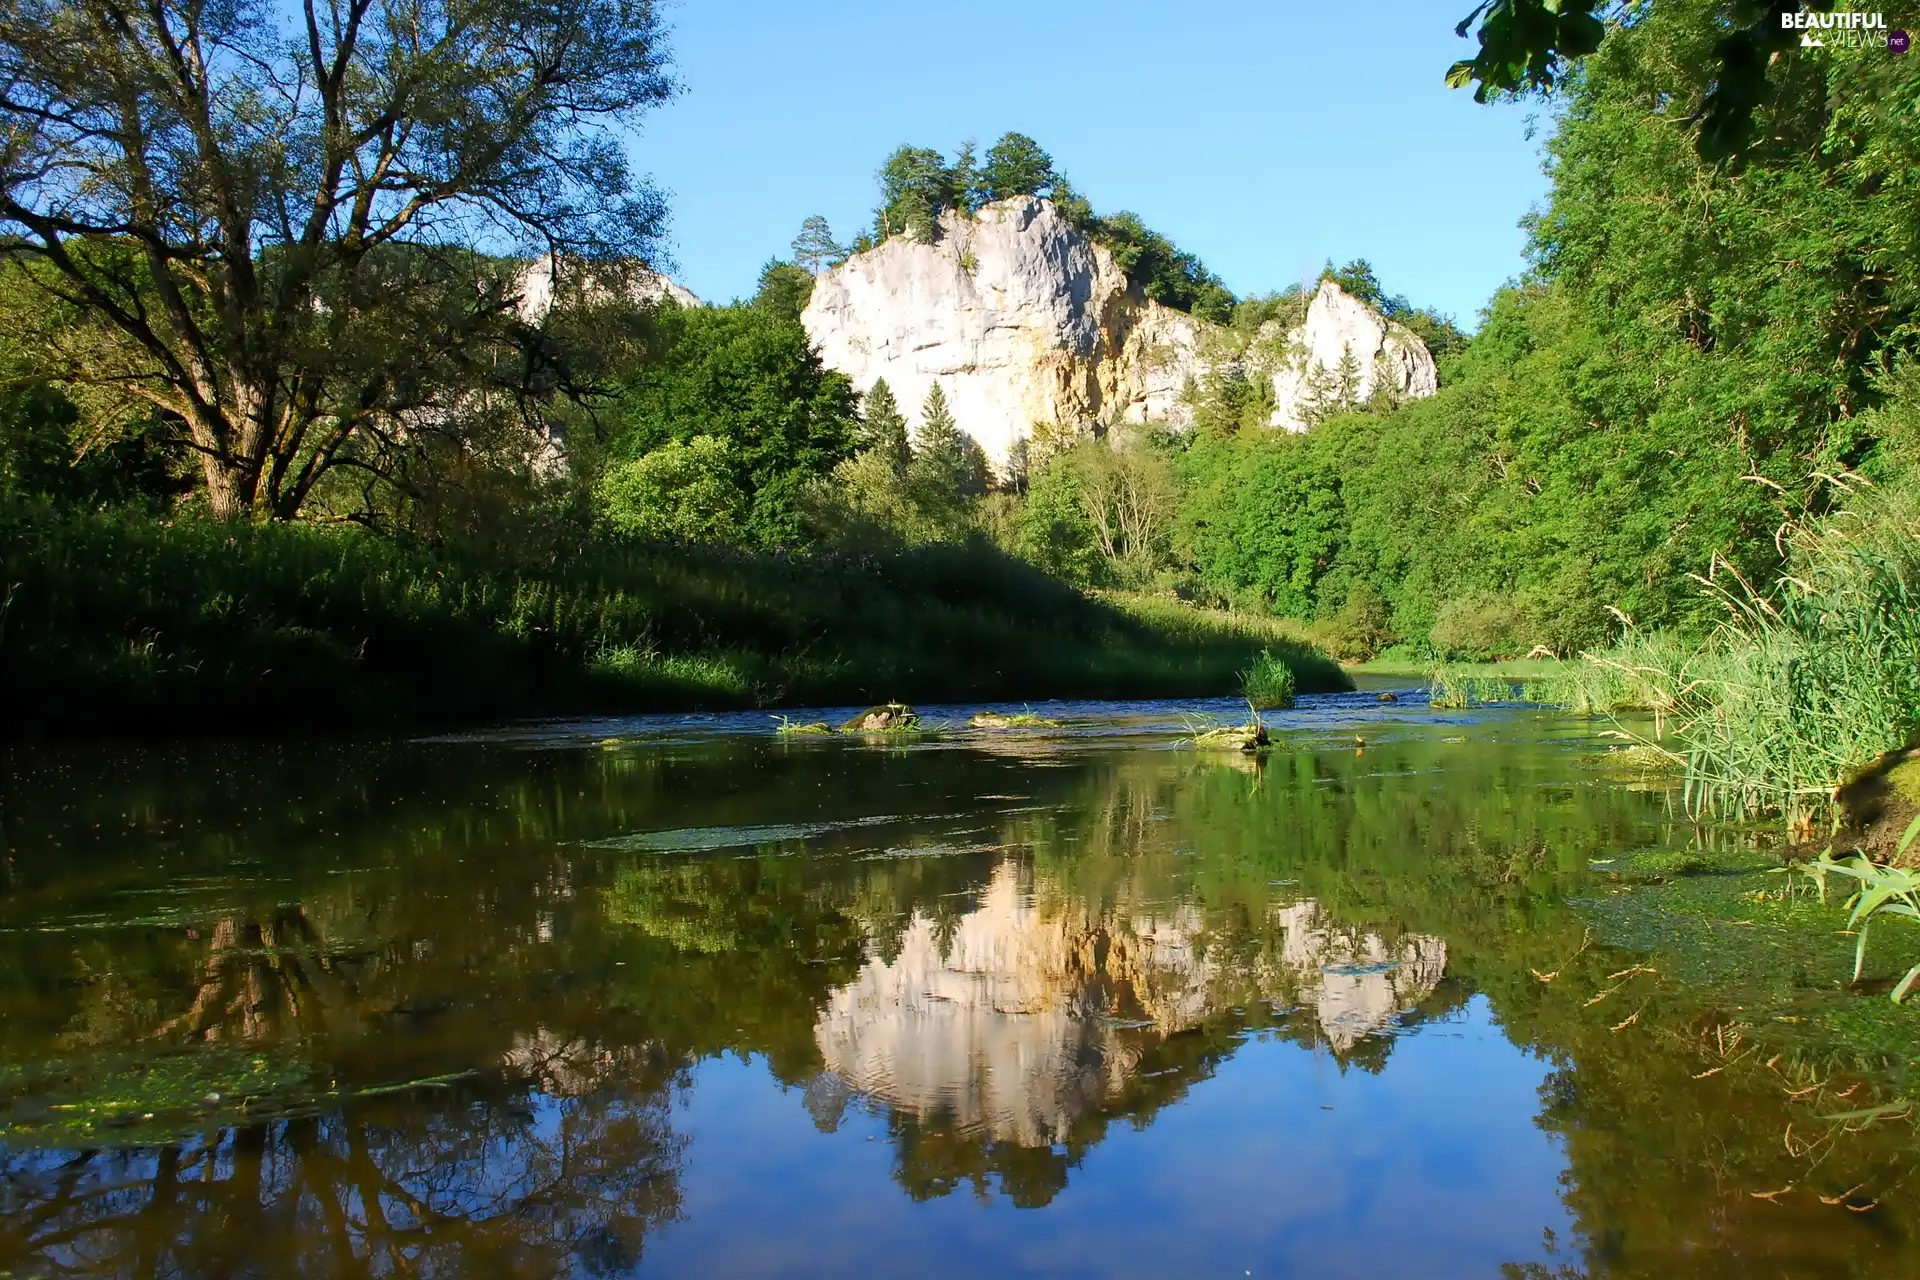 reflection, River, rocks